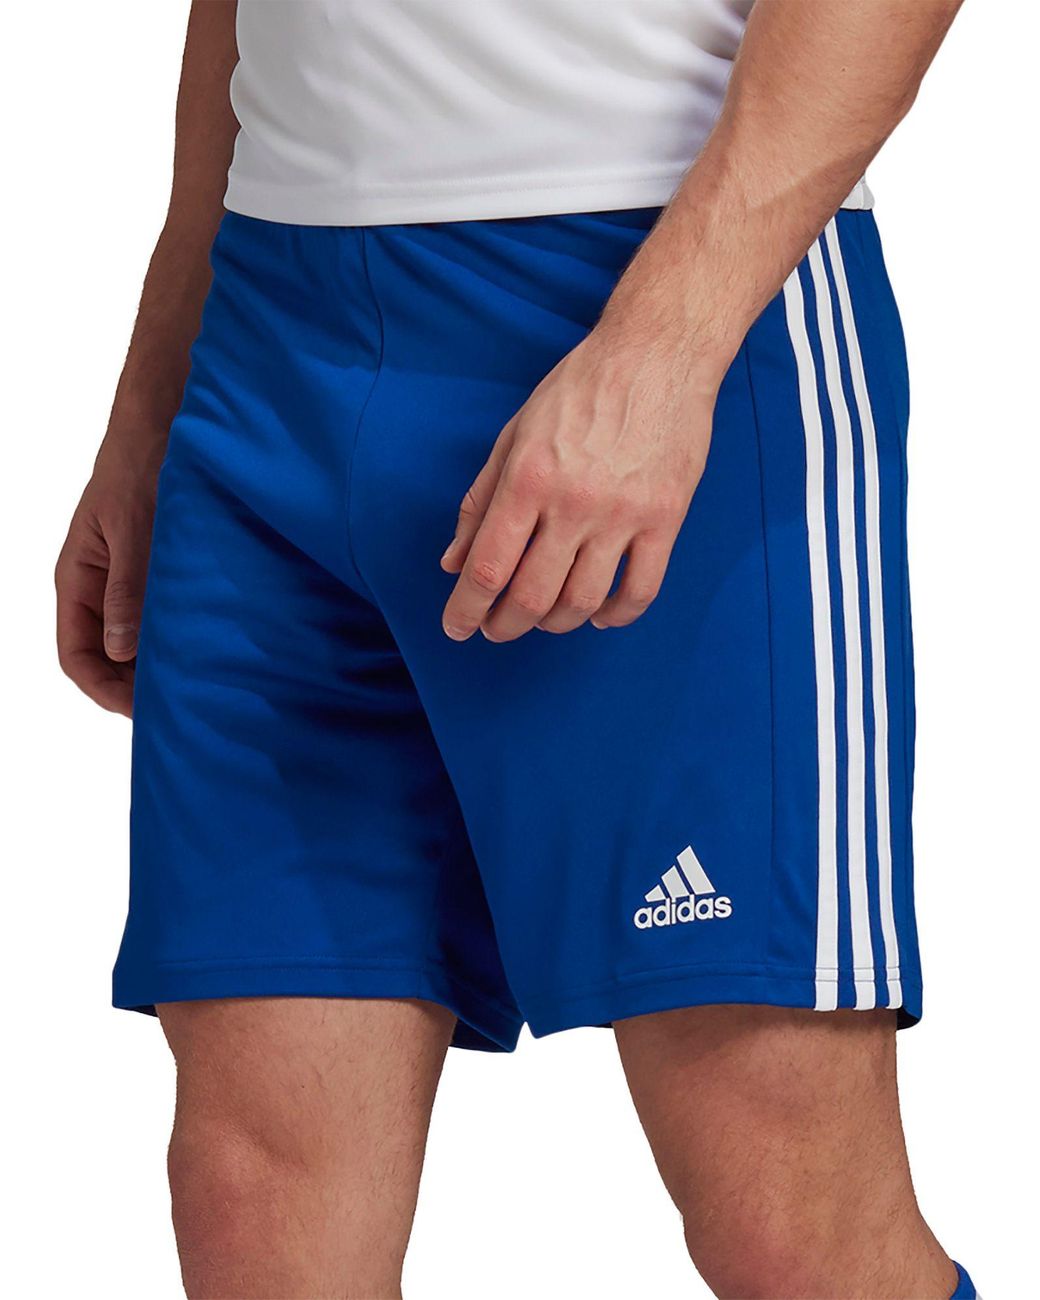 adidas Squadra 21 Primegreen Soccer Shorts in Blue for Men - Lyst